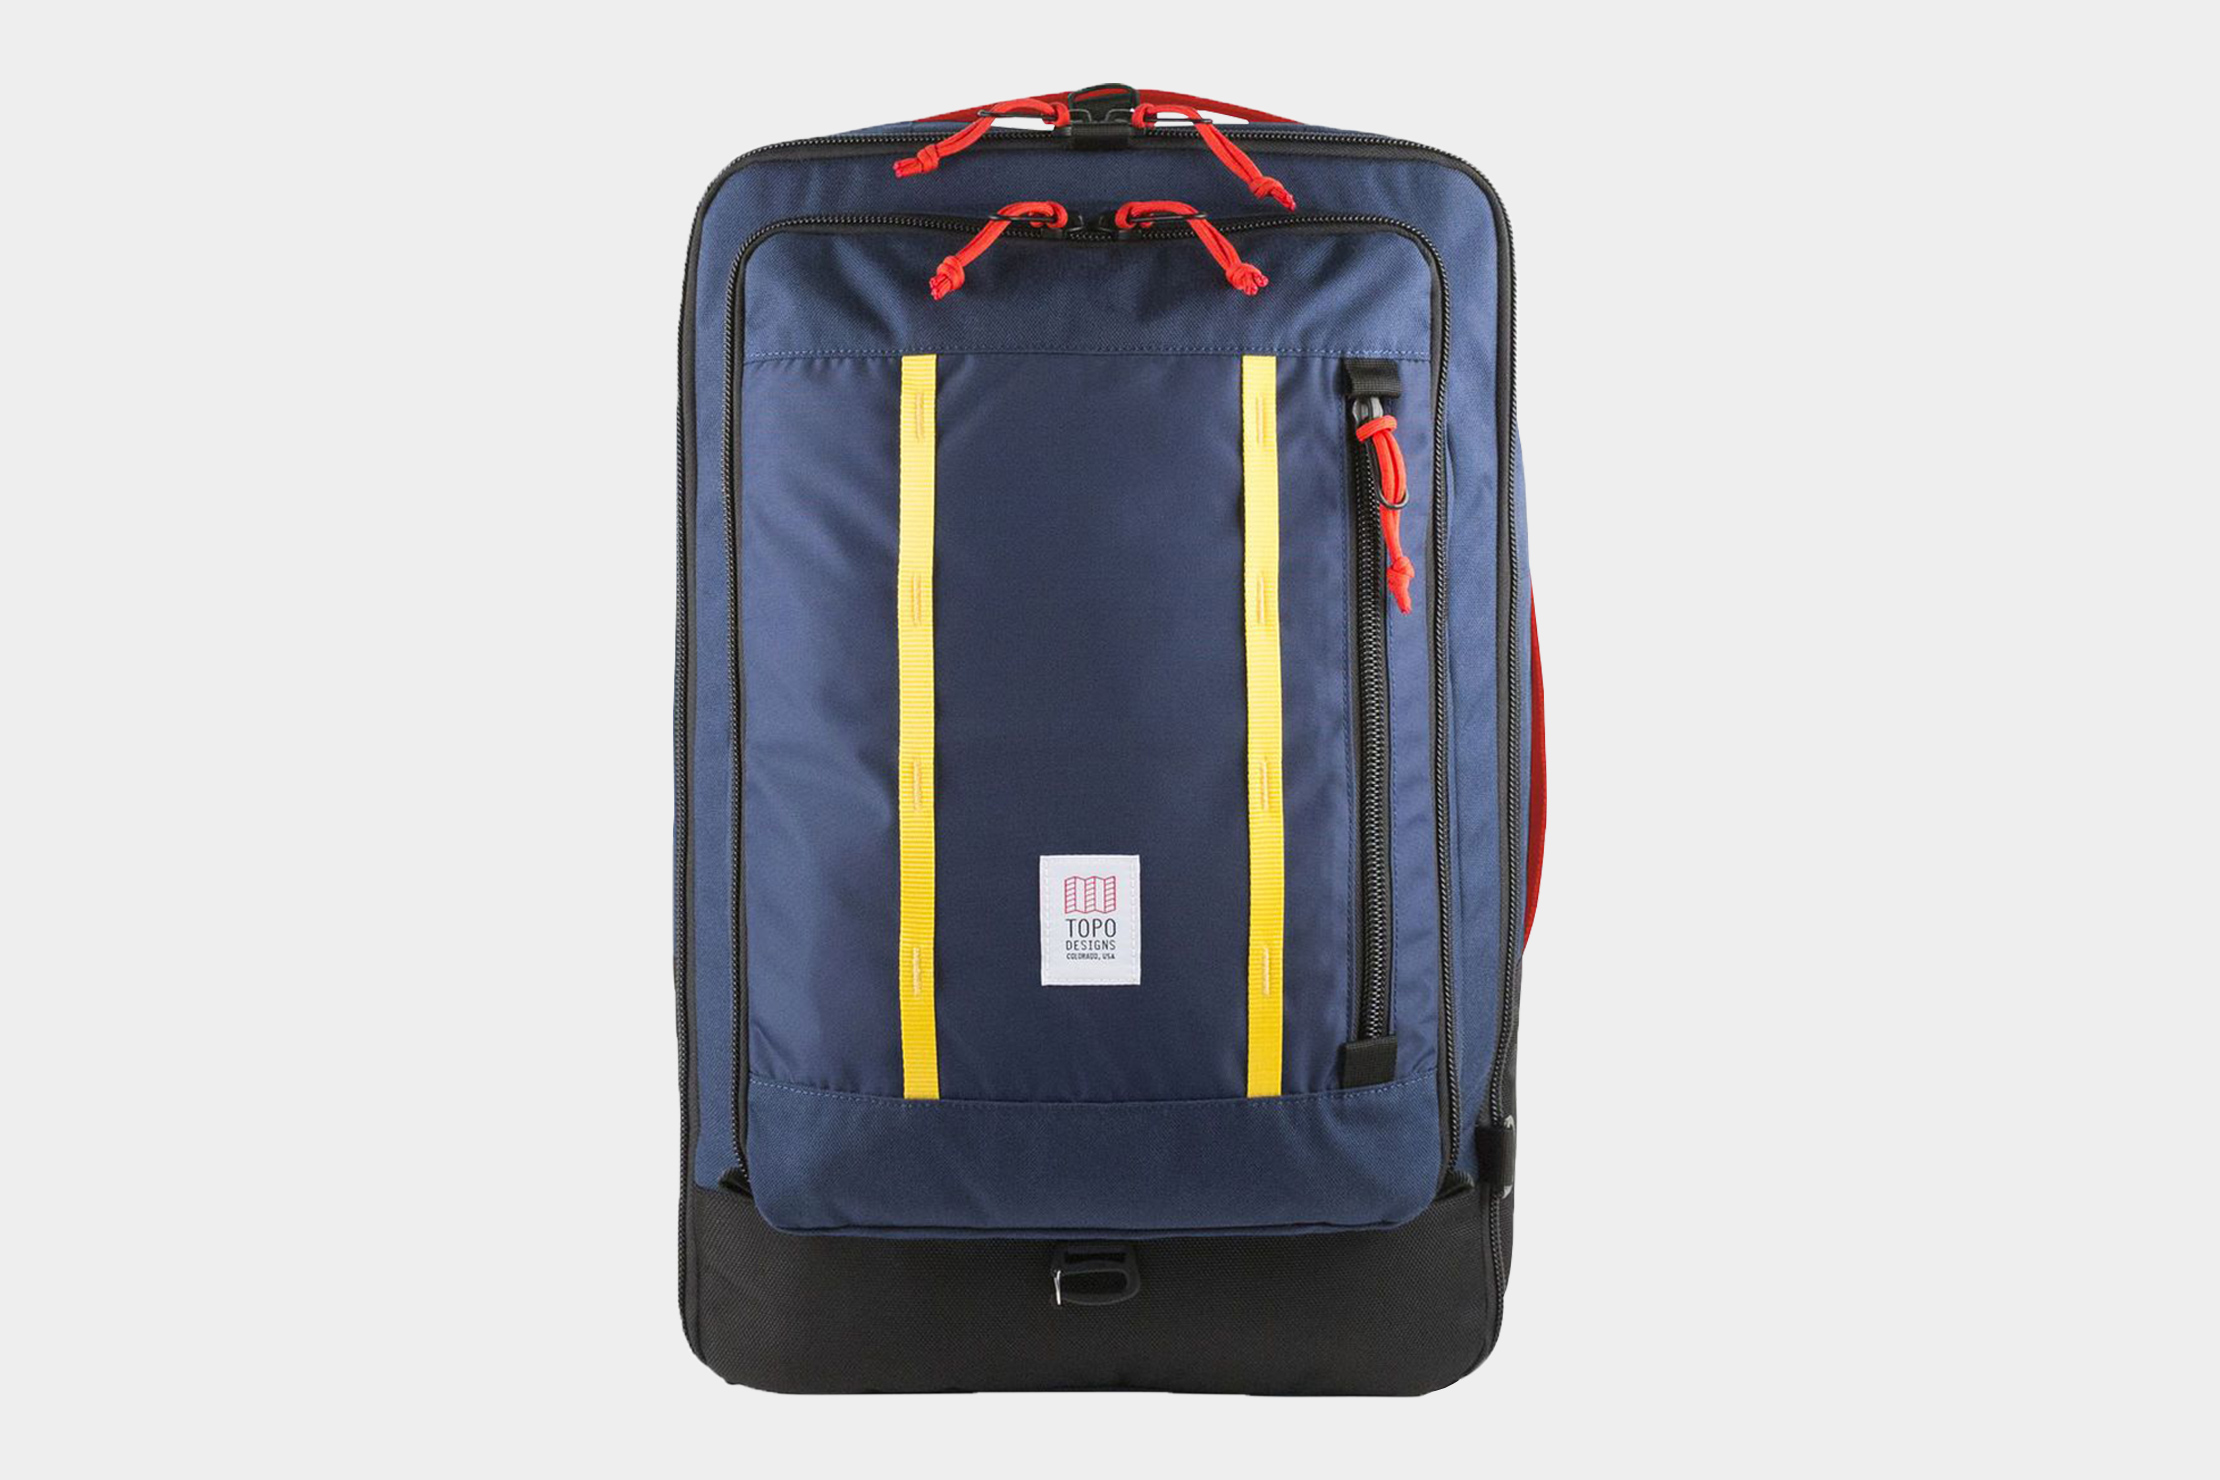 Fashion Hiking Camping Bag Carbon Fiber Look Hard Shell Trekking Travel Backpack 